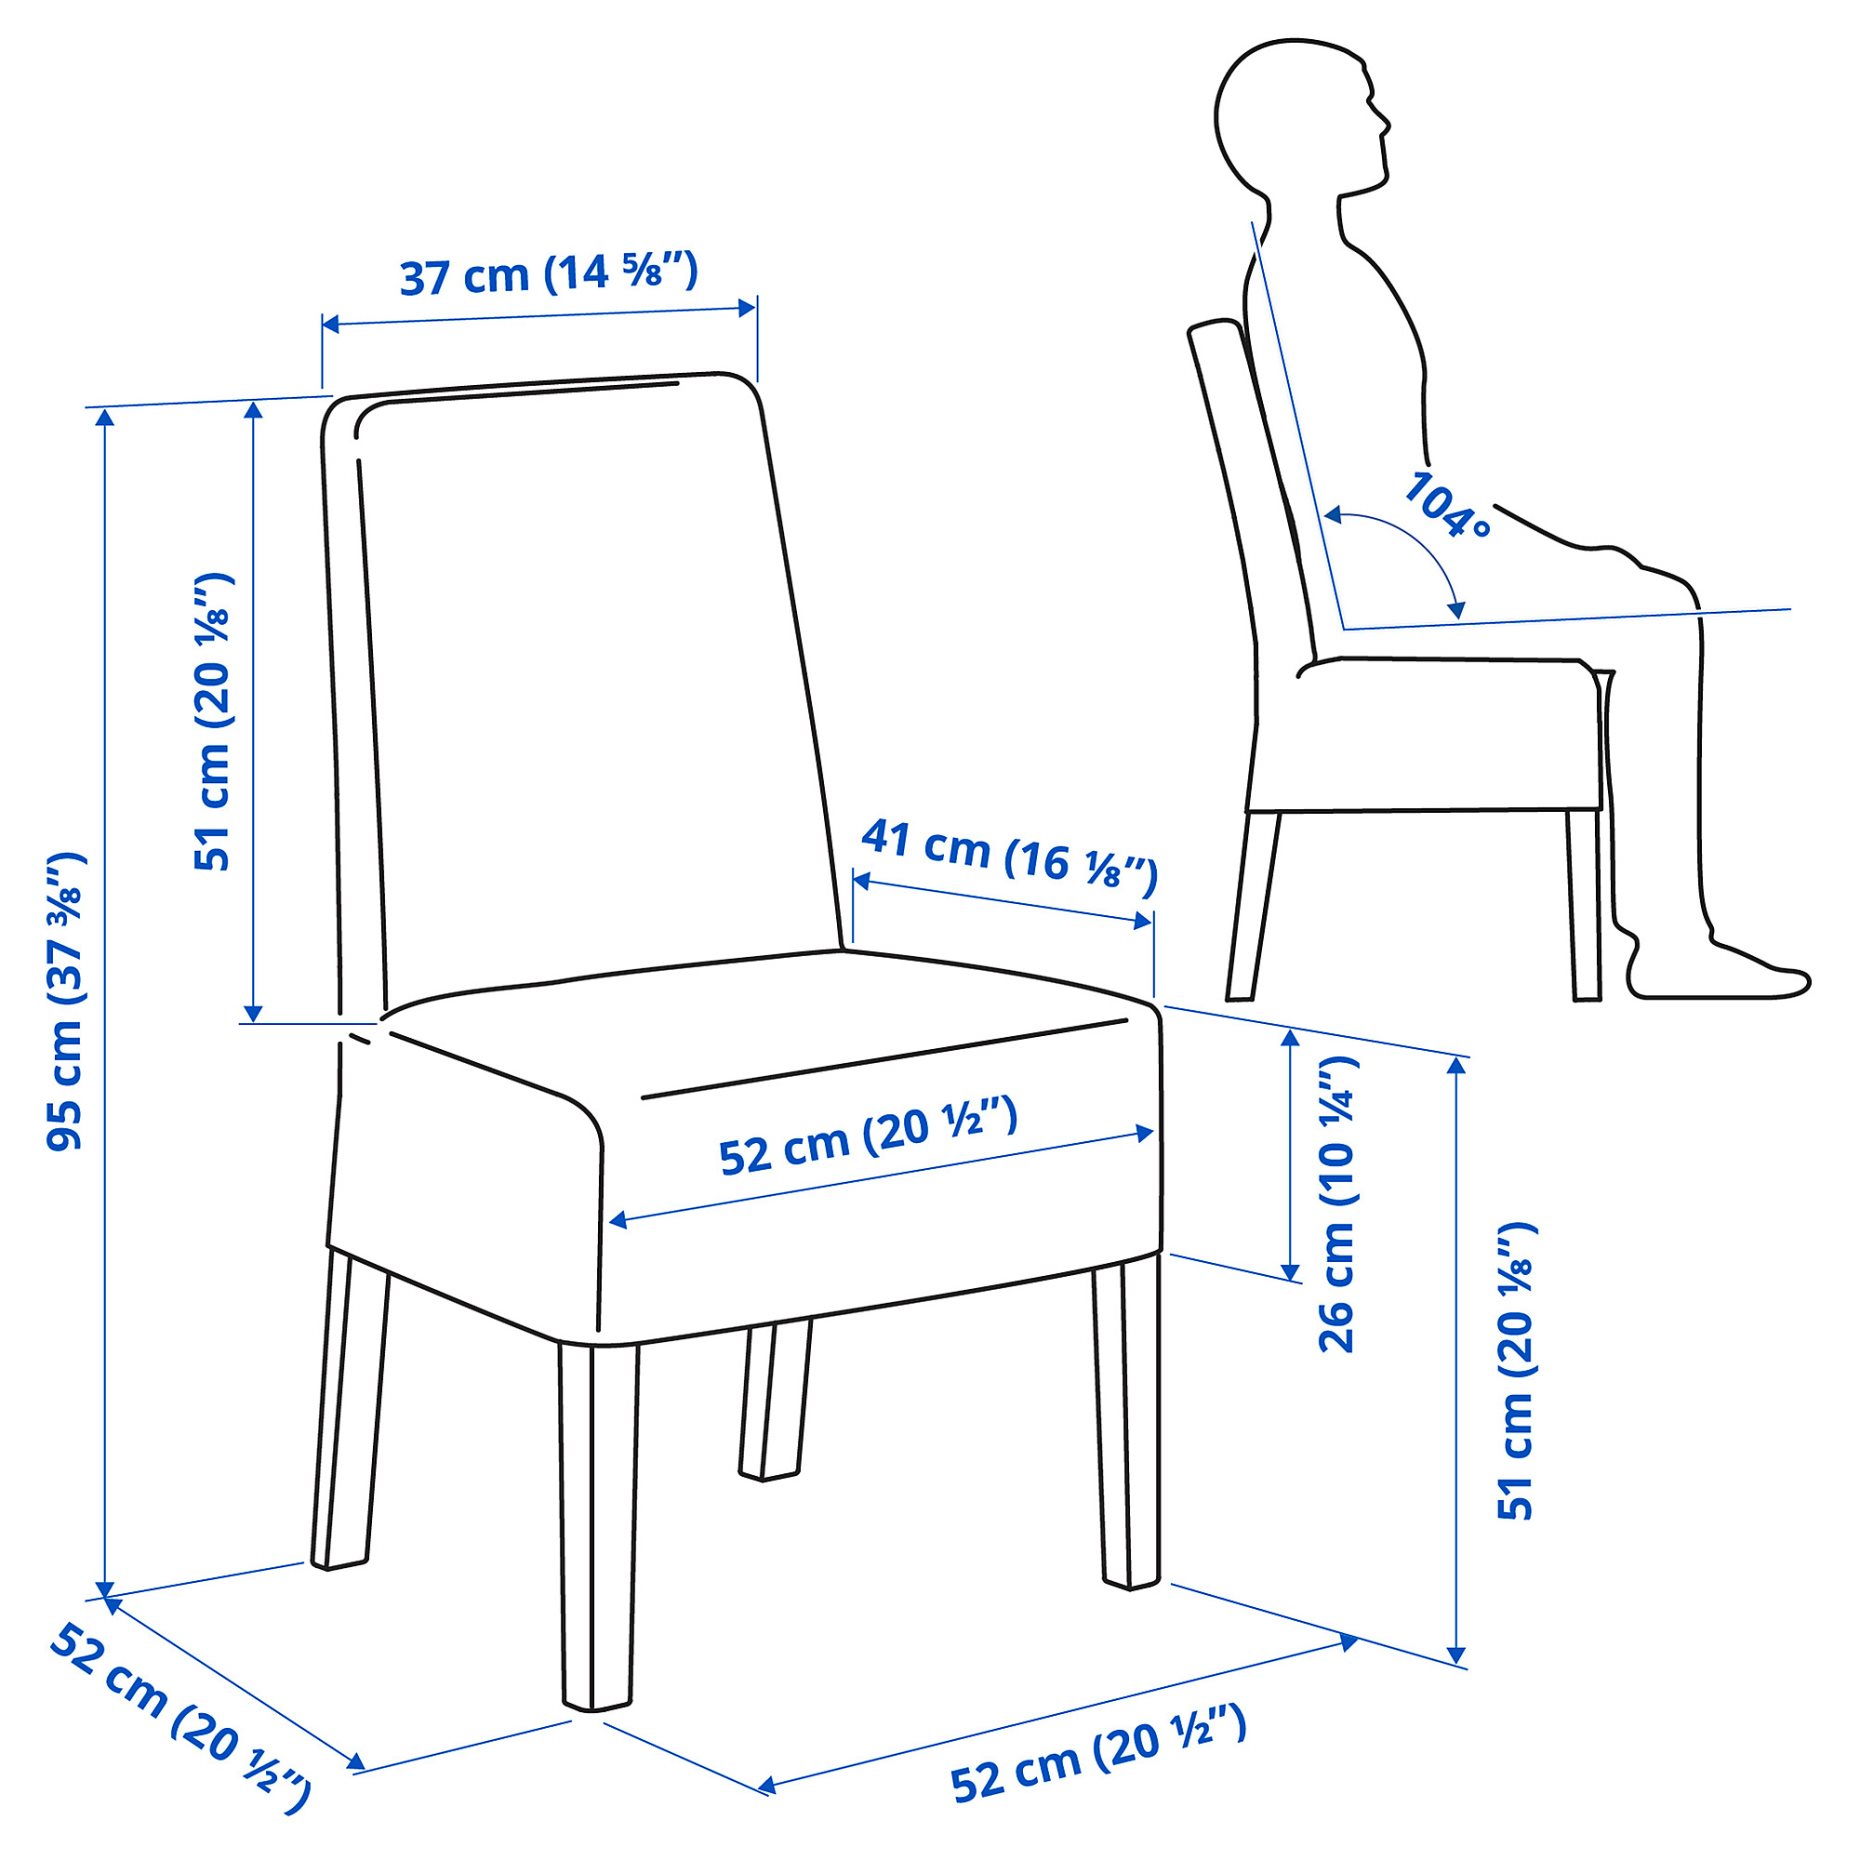 BERGMUND, chair with medium long cover, 393.900.03